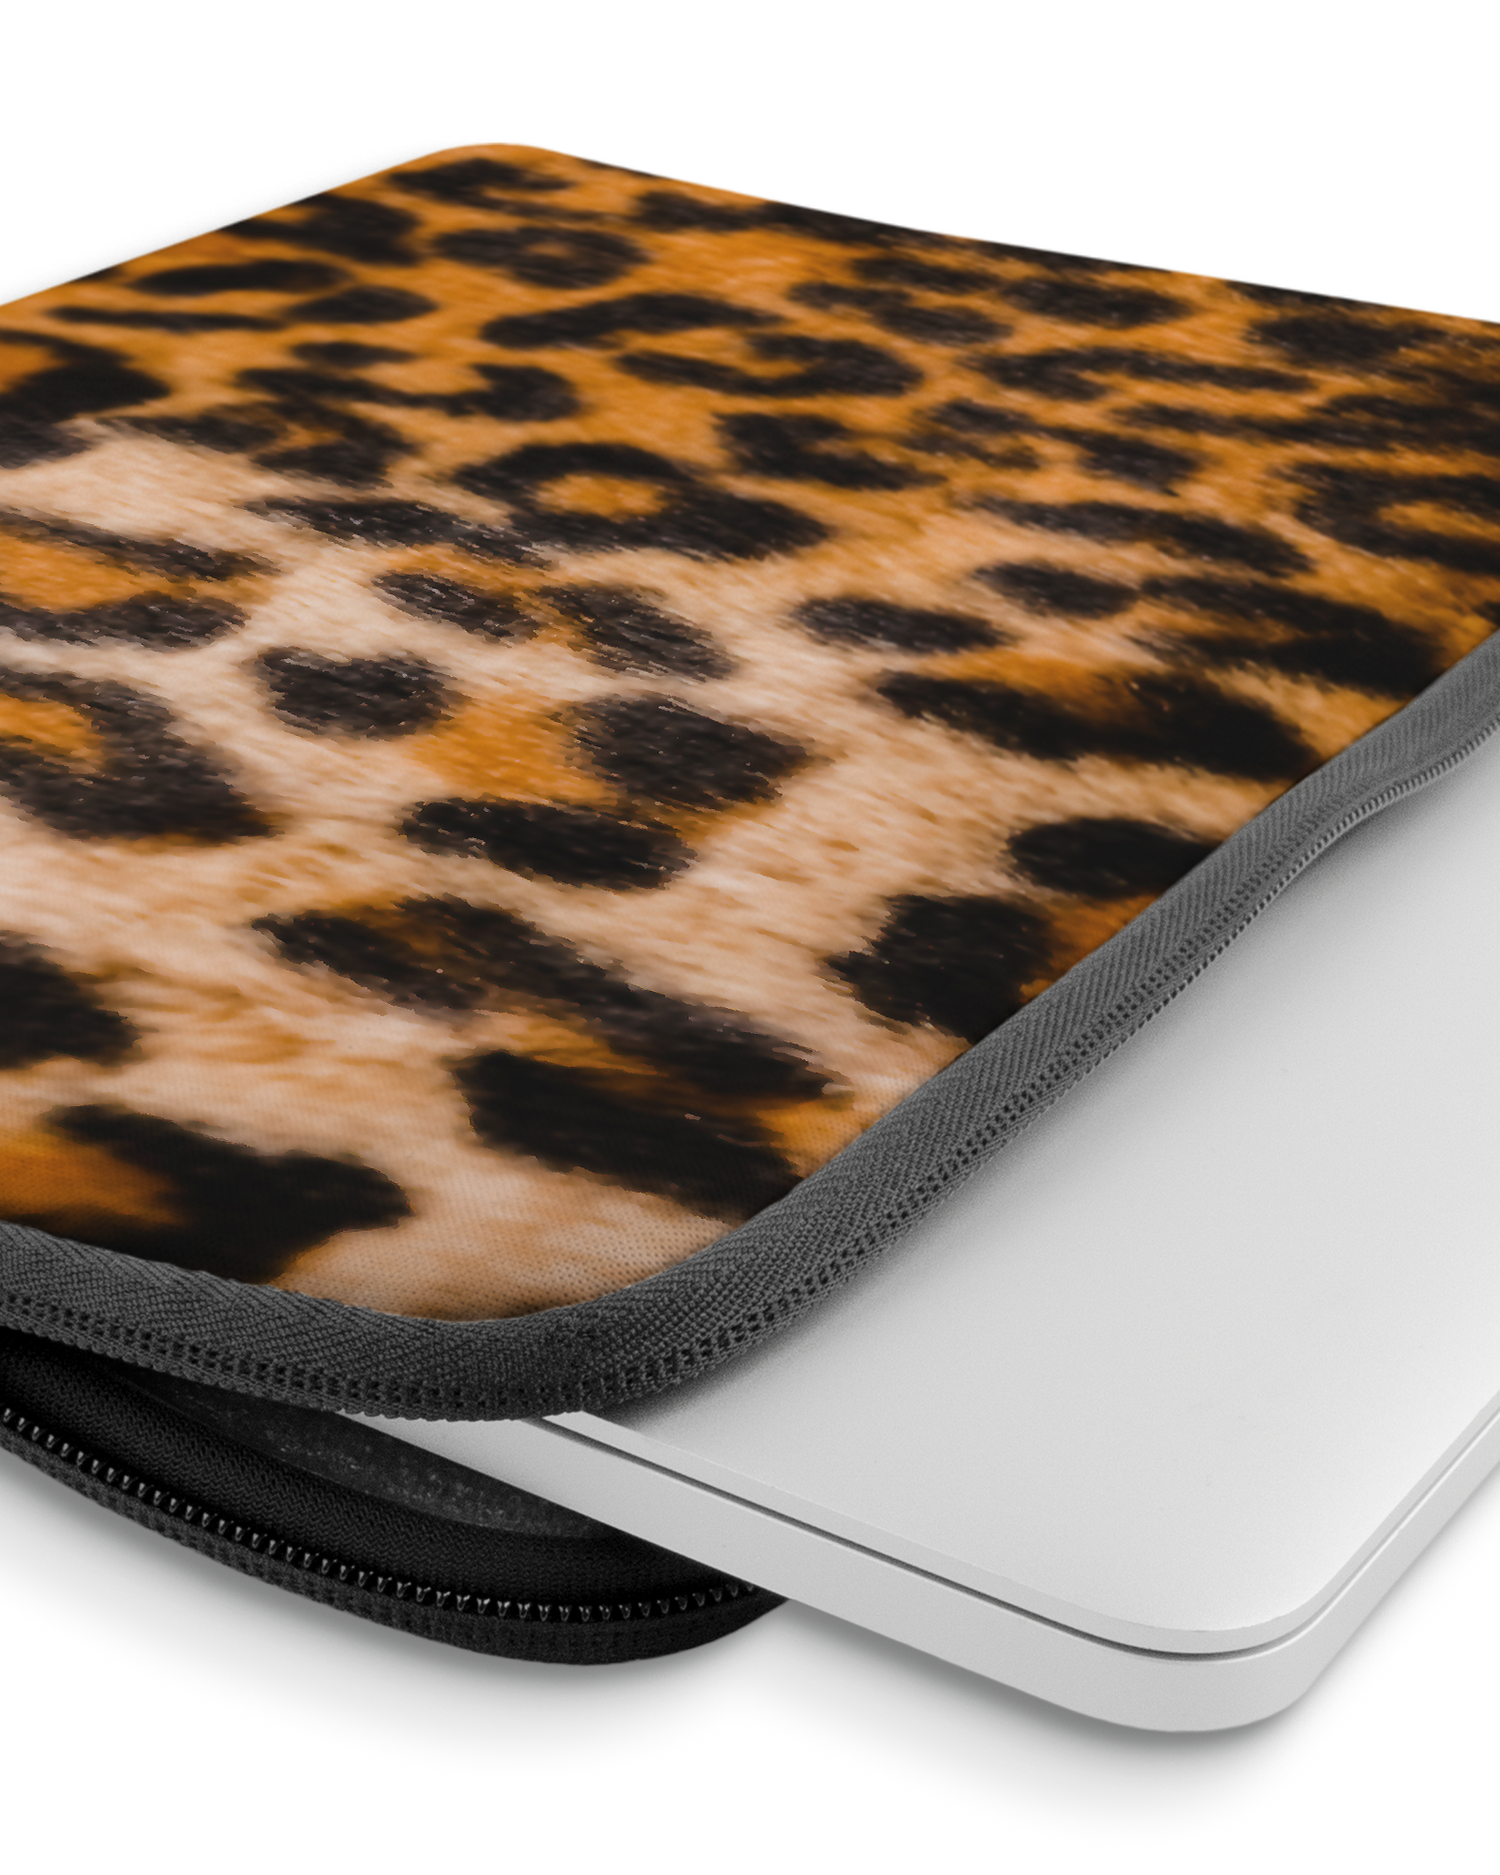 Leopard Pattern Laptop Case 14 inch with device inside